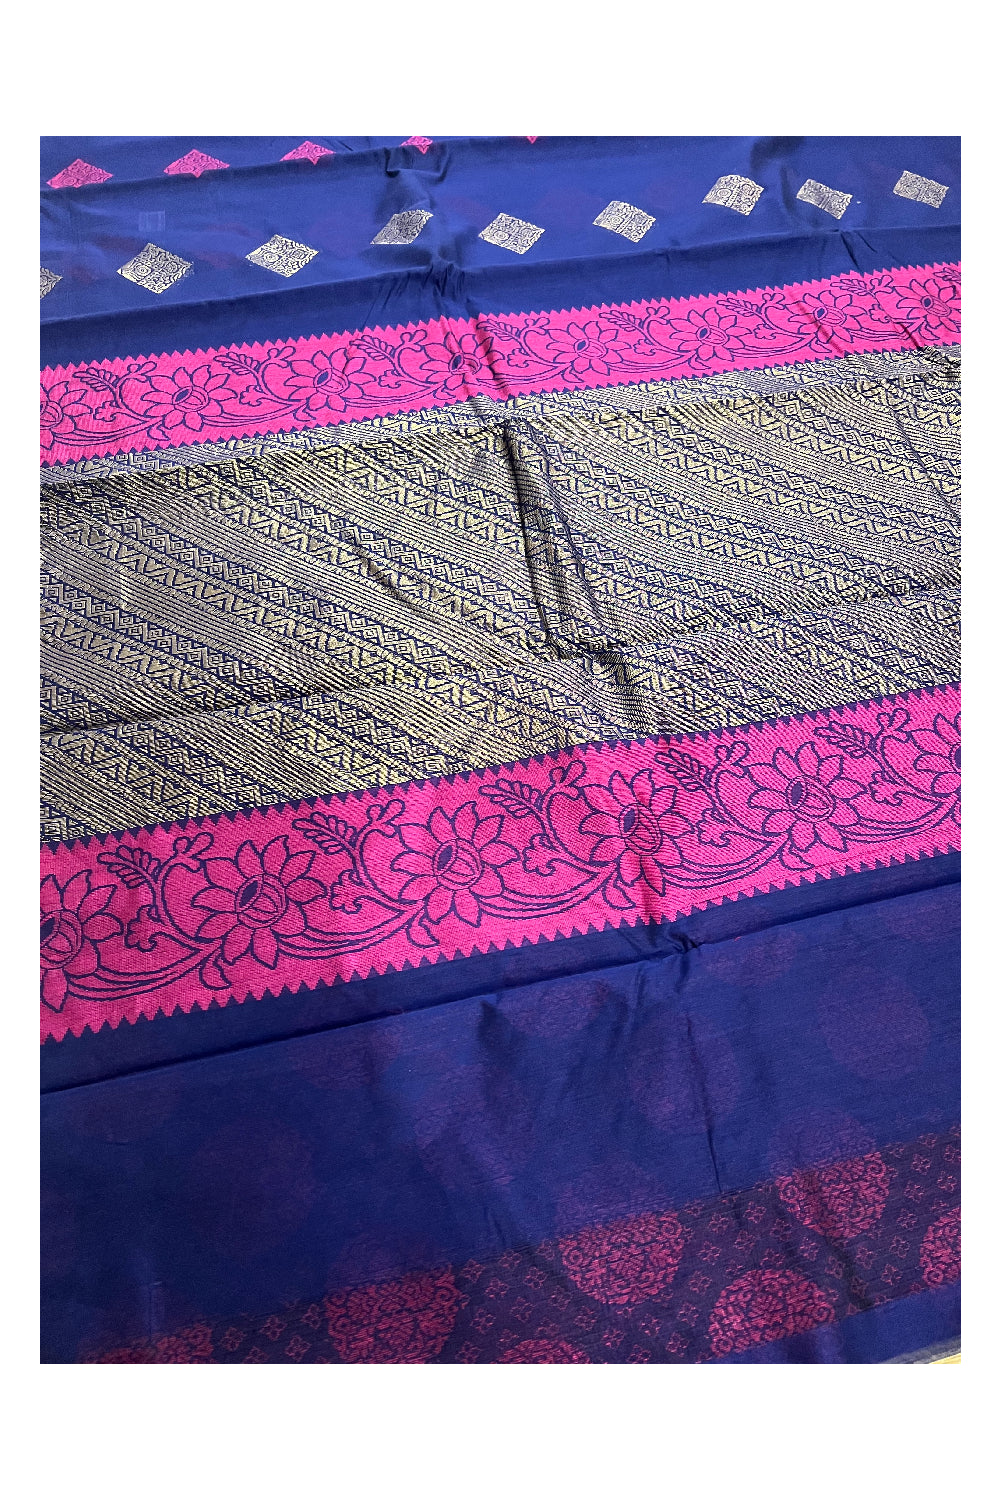 Southloom Dark Blue Cotton Designer Saree with Magenta and Zari Woven Patterns